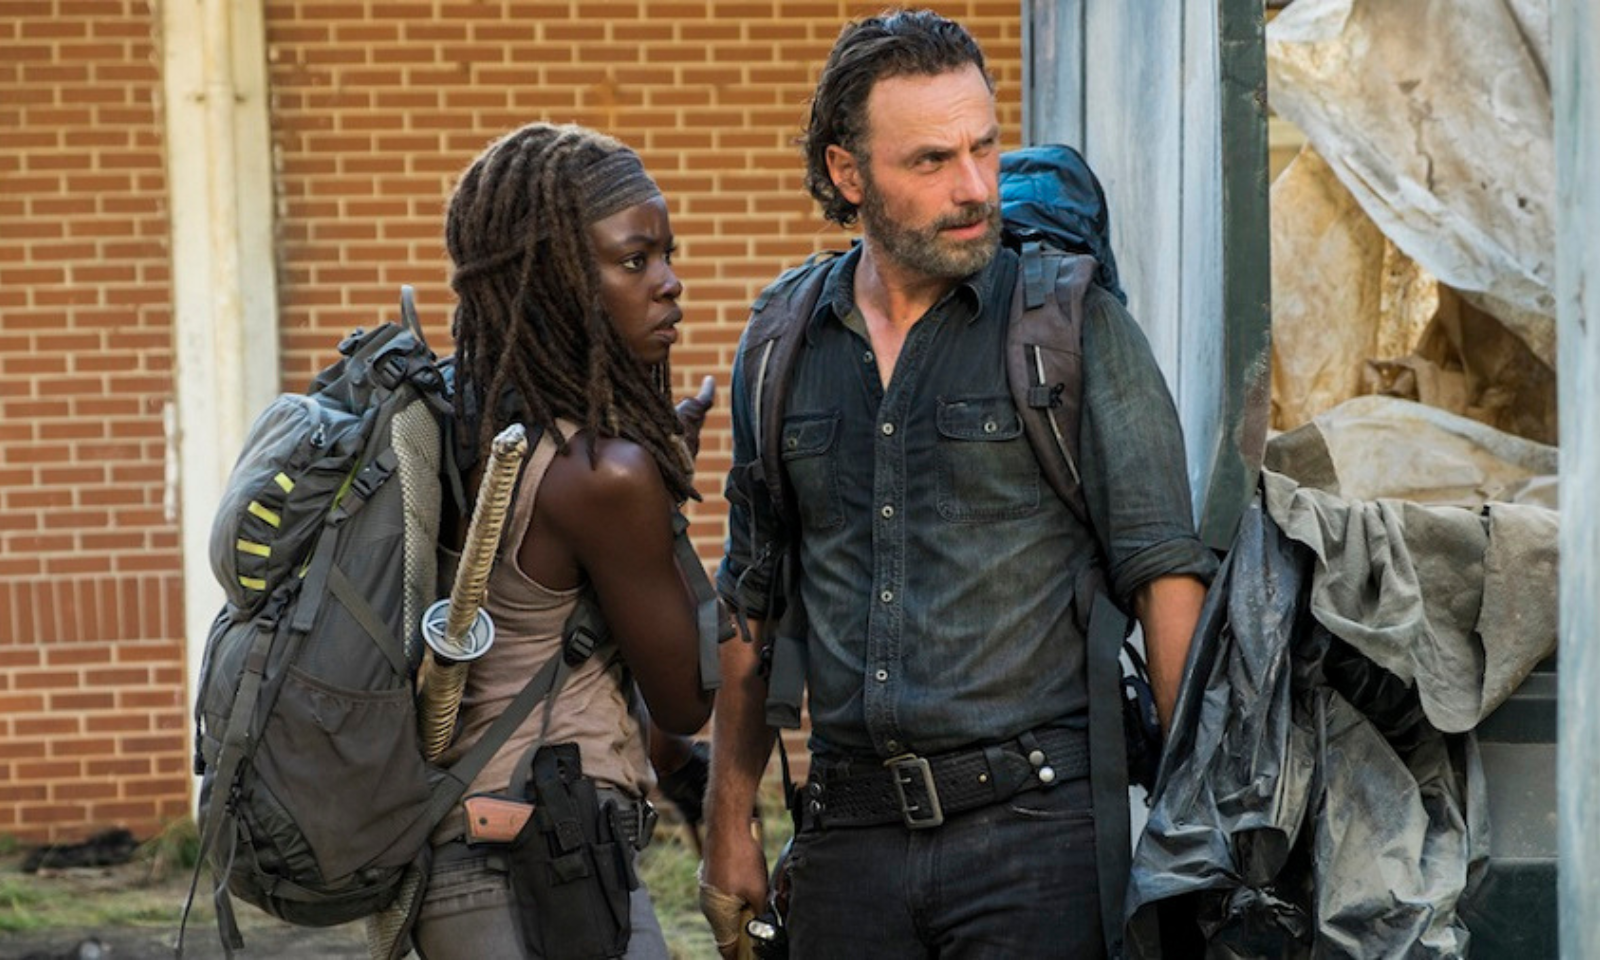 Anunciado novo spin-off de The Walking Dead focado em Rick e Michonne